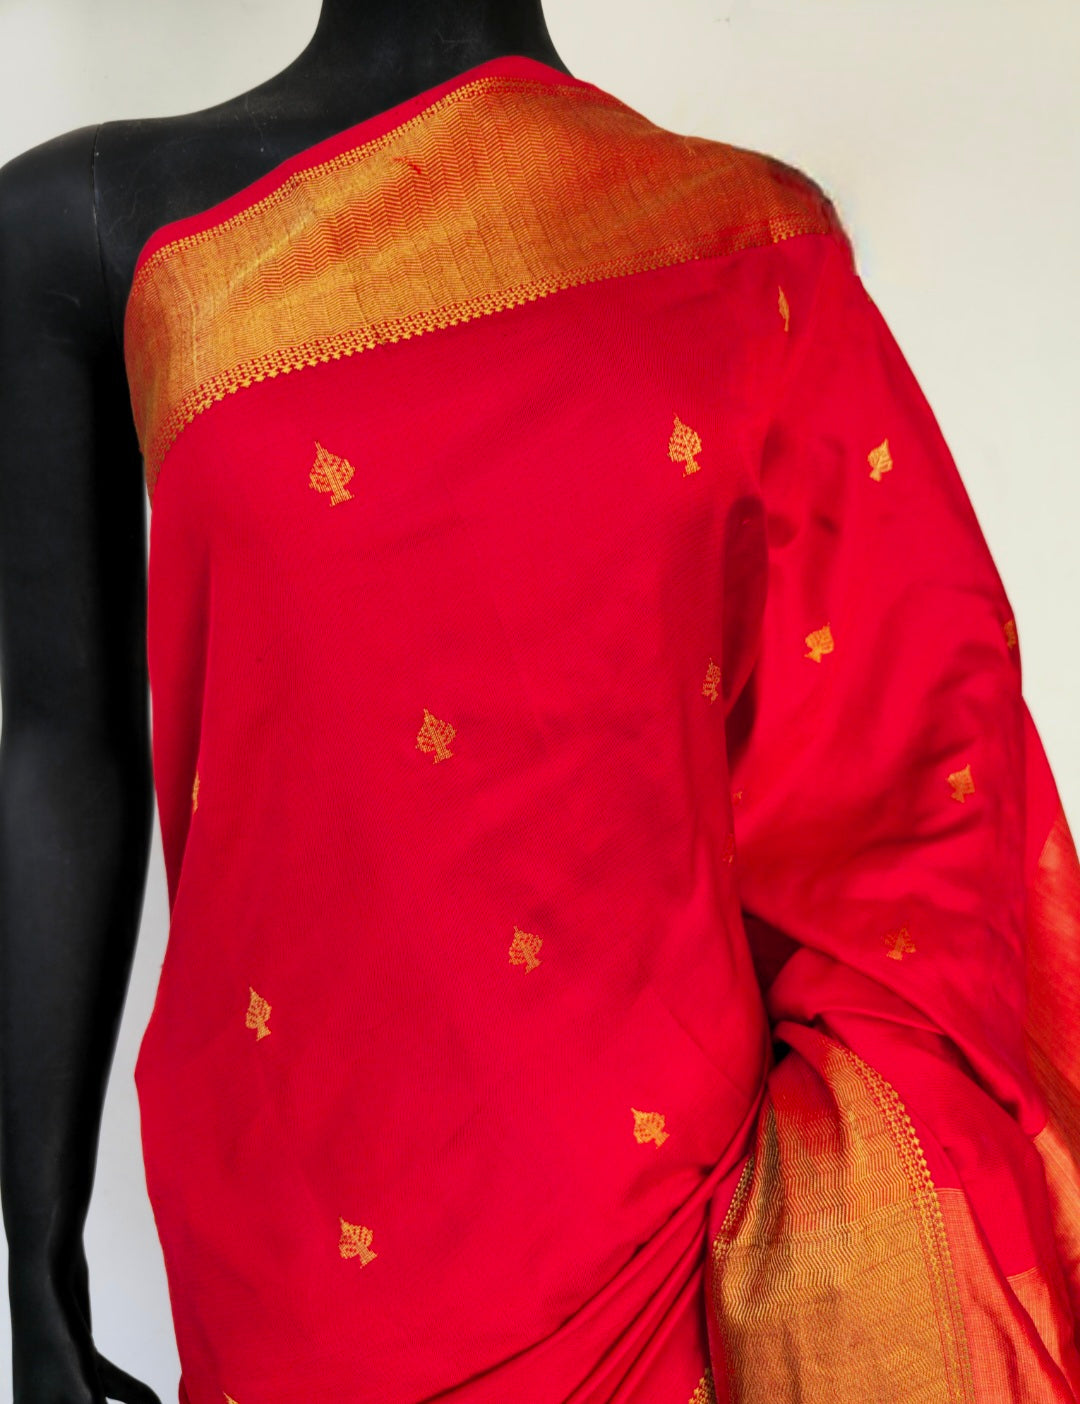 Draped in Desire: "Mashru" Mulberry Silk Saree, "Peepal Patta" Adorned, in Luscious Red.